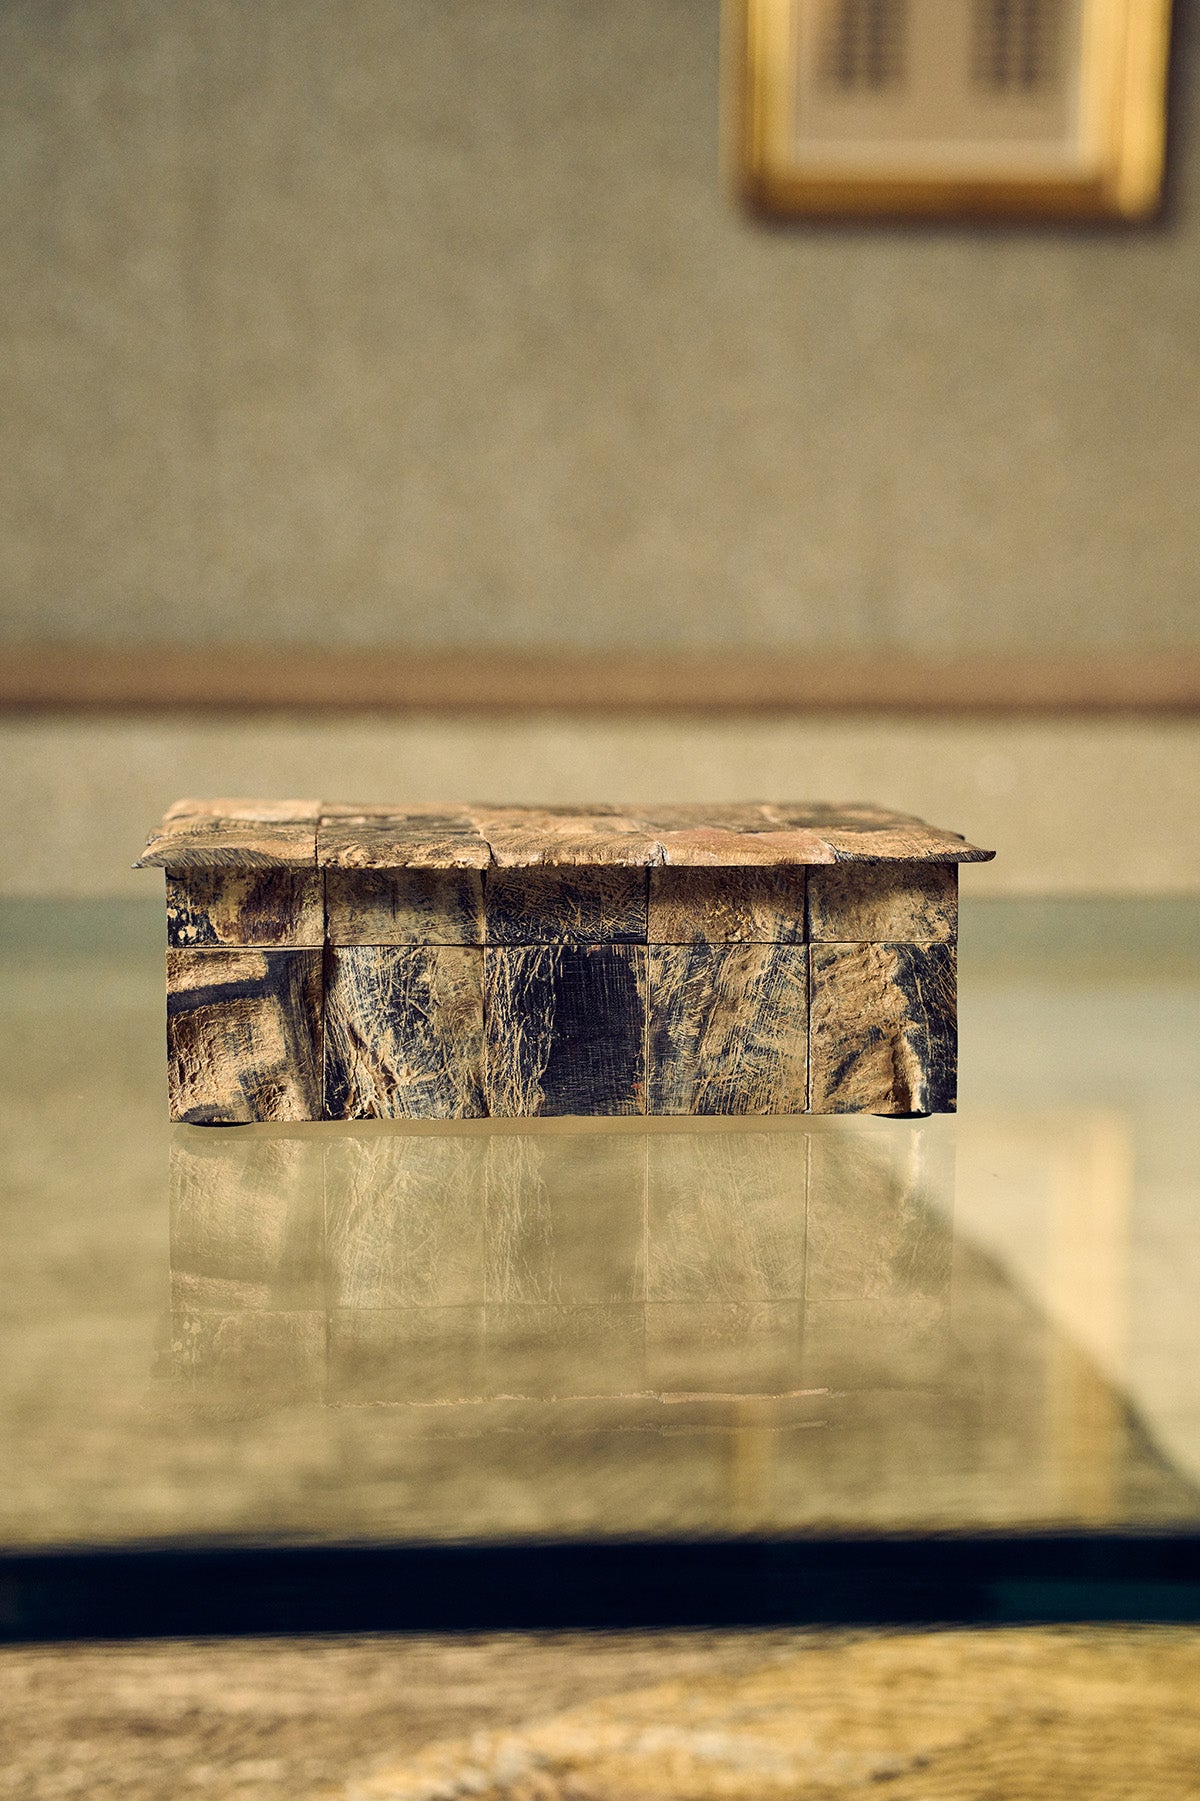 Afghan Petrified Wood Box